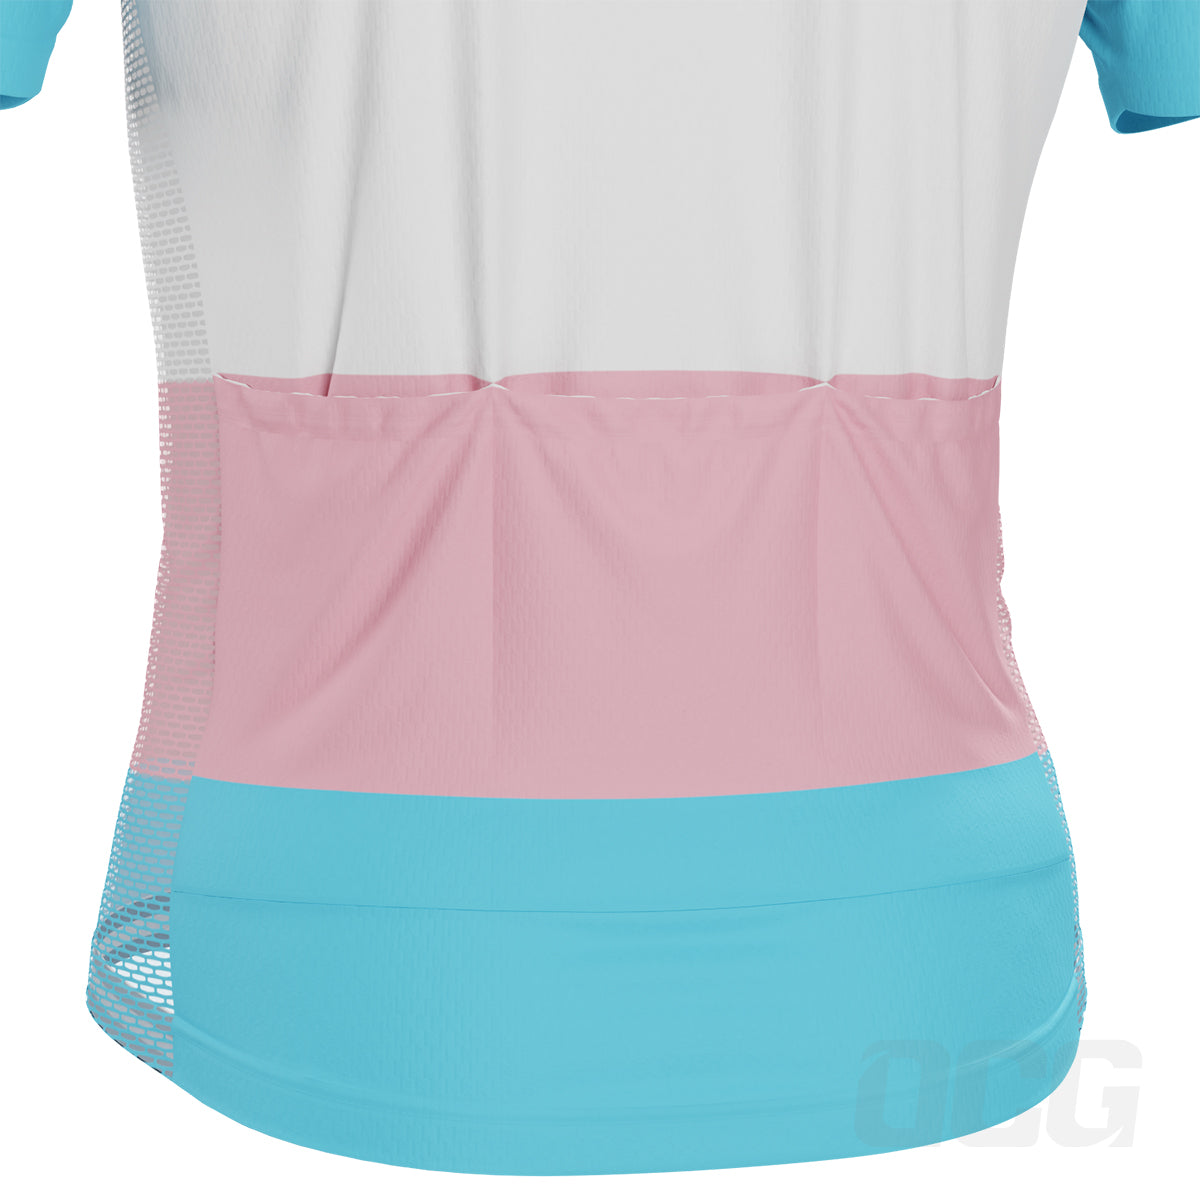 Men's LGBT Trans Pride Short Sleeve Cycling Jersey